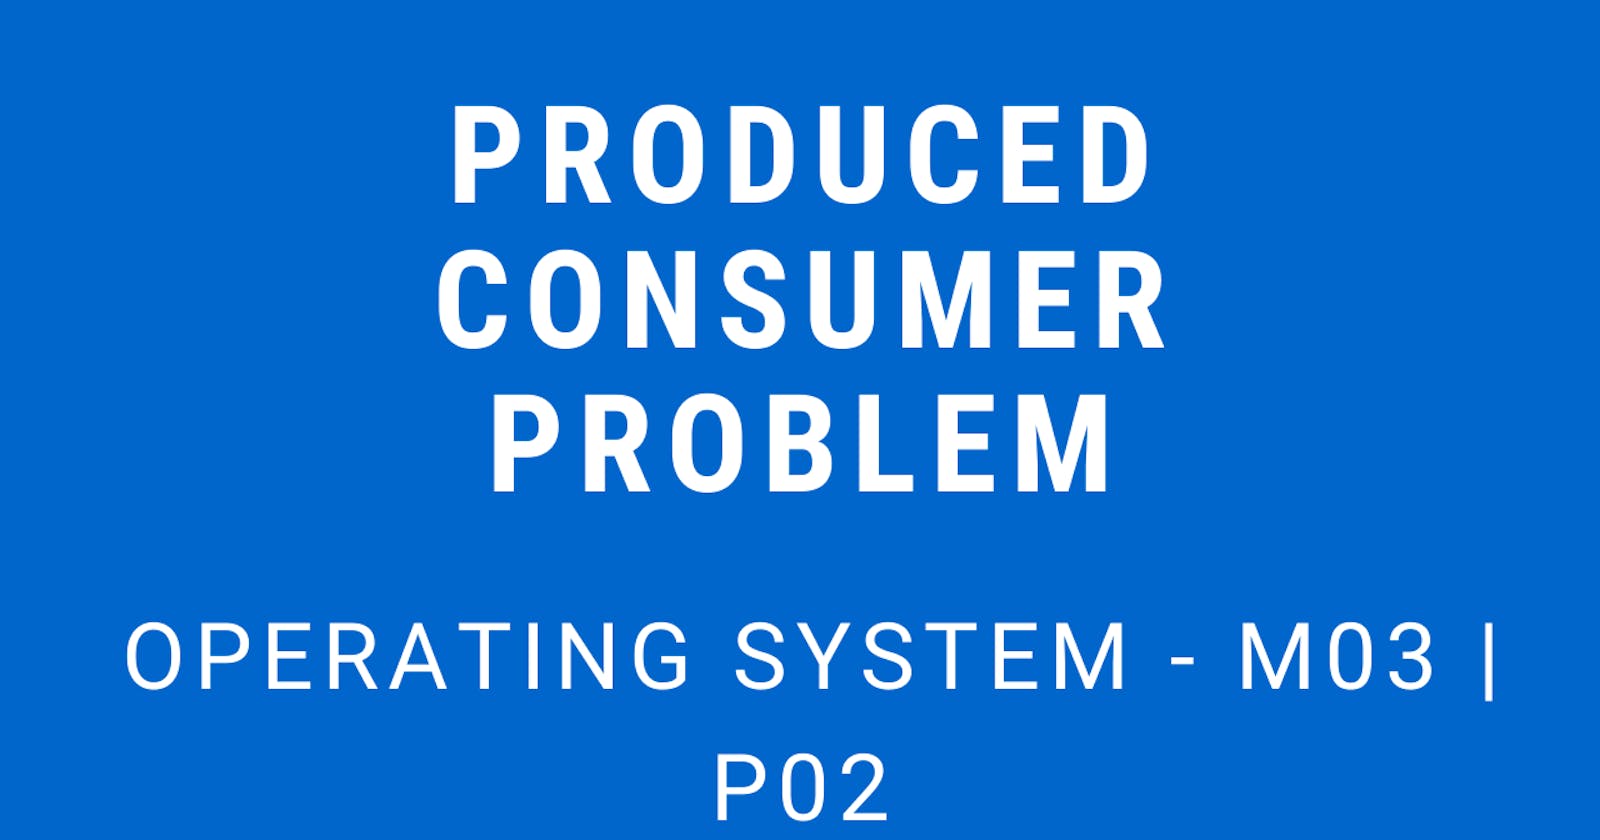 Producer Consumer Problem | Operating System - M03 P02